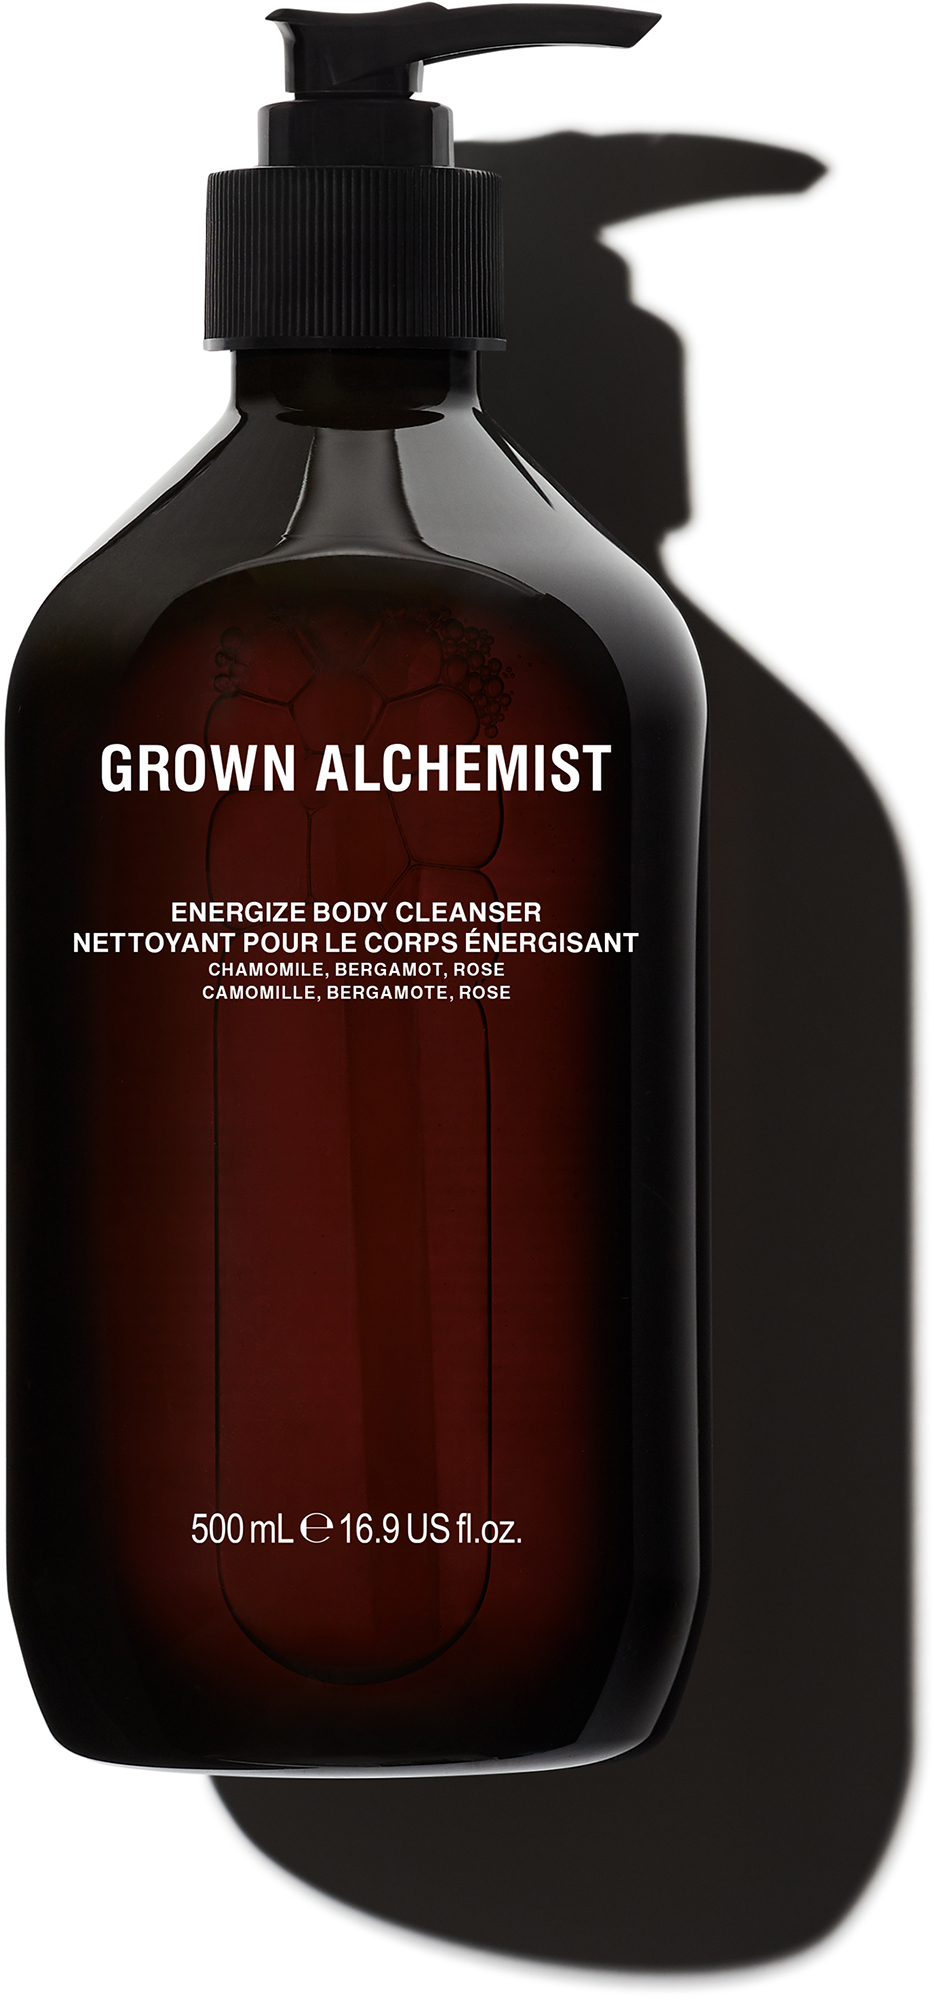 https://lyko.com/globalassets/product-images/grown-alchemist-energize-body-cleanser-500ml-2382-174-0500_1.jpg?ref=404BC7D7E9